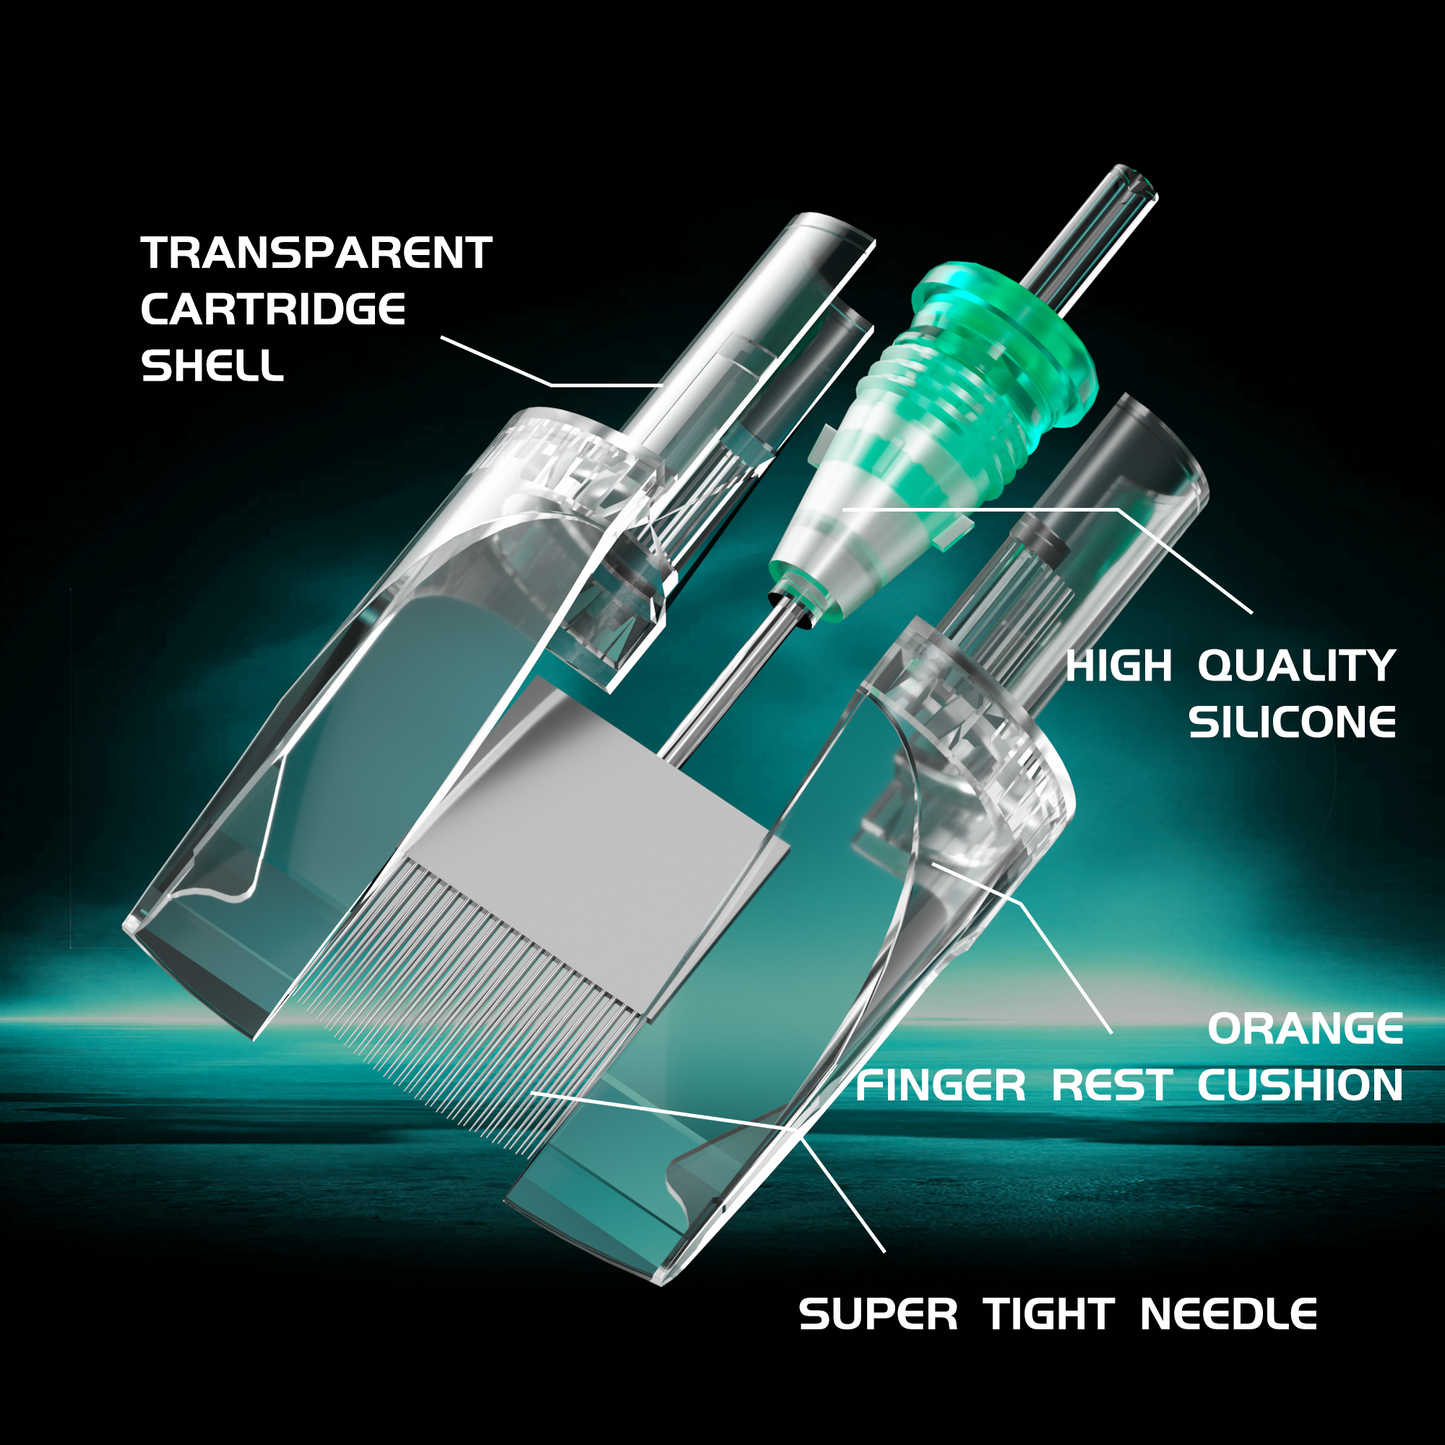 BIGWASP Large Transparent Cartridges Needle Magnums